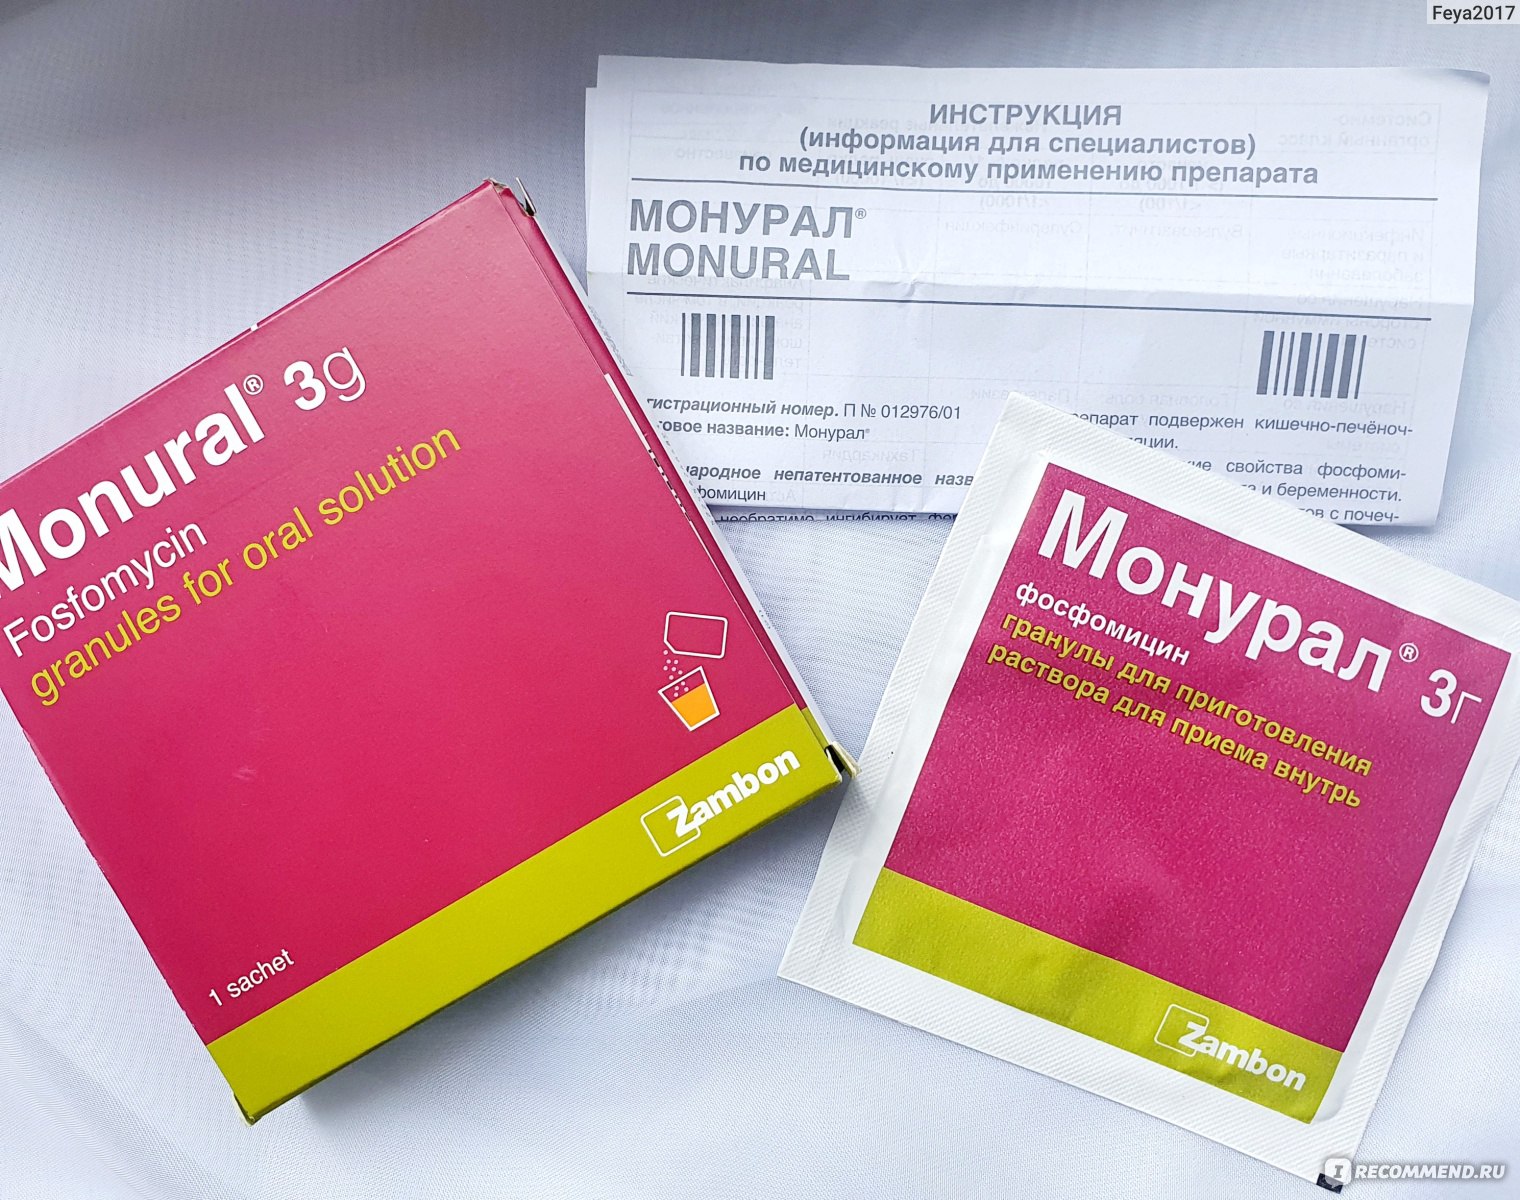 Сколько раз принимают монурал. Лекарство от цистита монурал. Монурал 2.0. Монурал таблетки для цистита. Цистит порошок монурал.